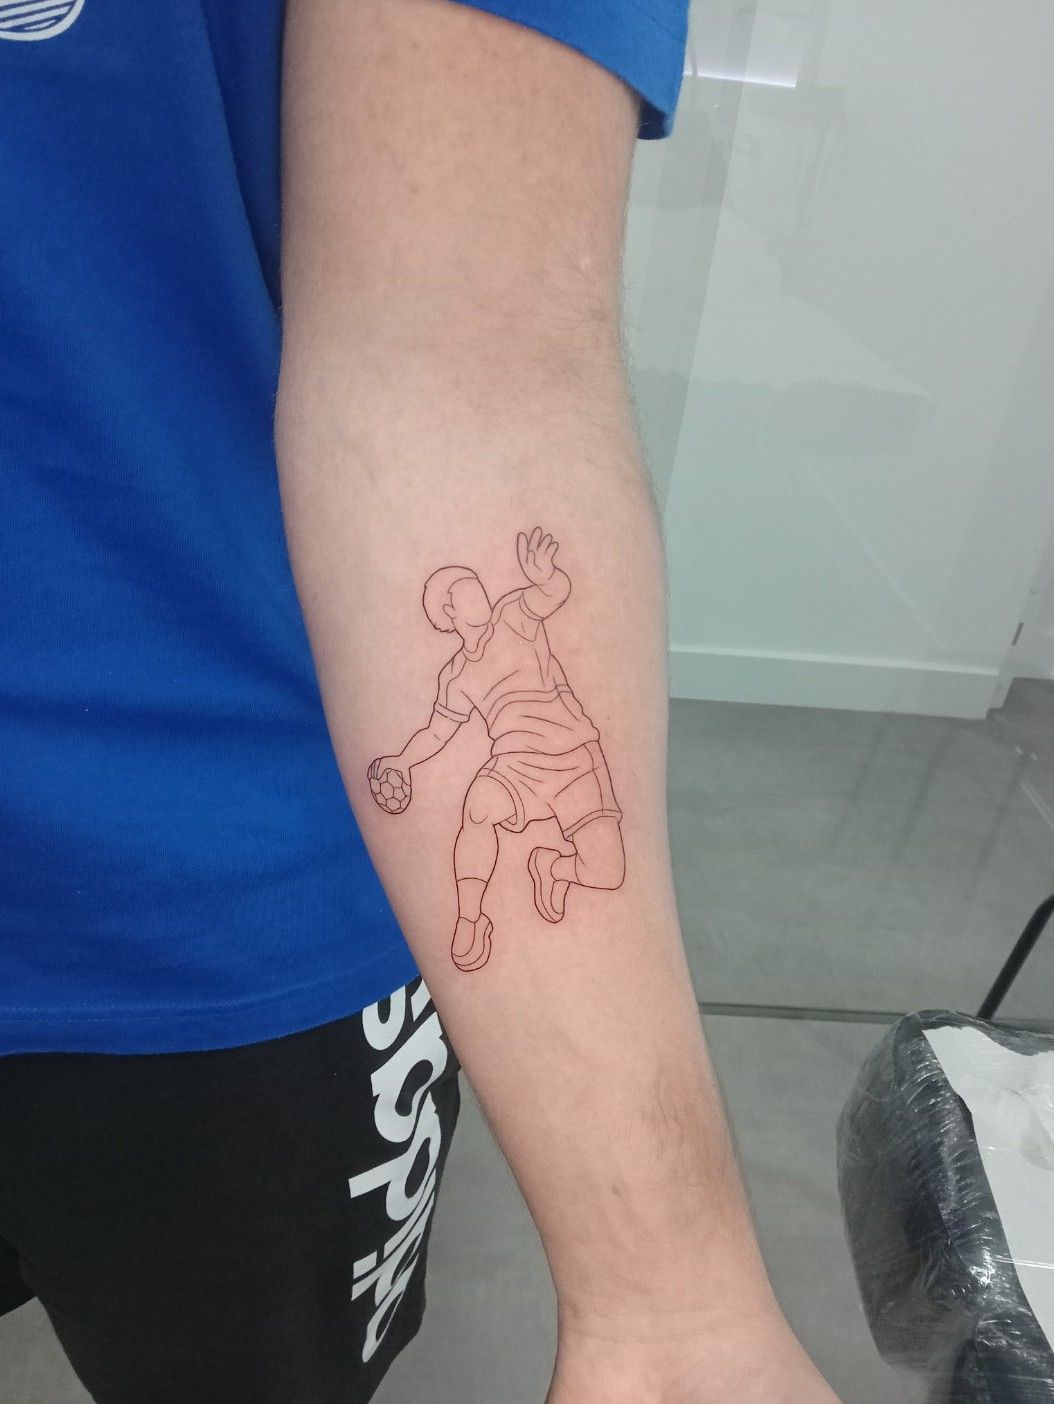 Tattoo uploaded by Daniel Gembus • Sketchy handball tattoo • Tattoodo